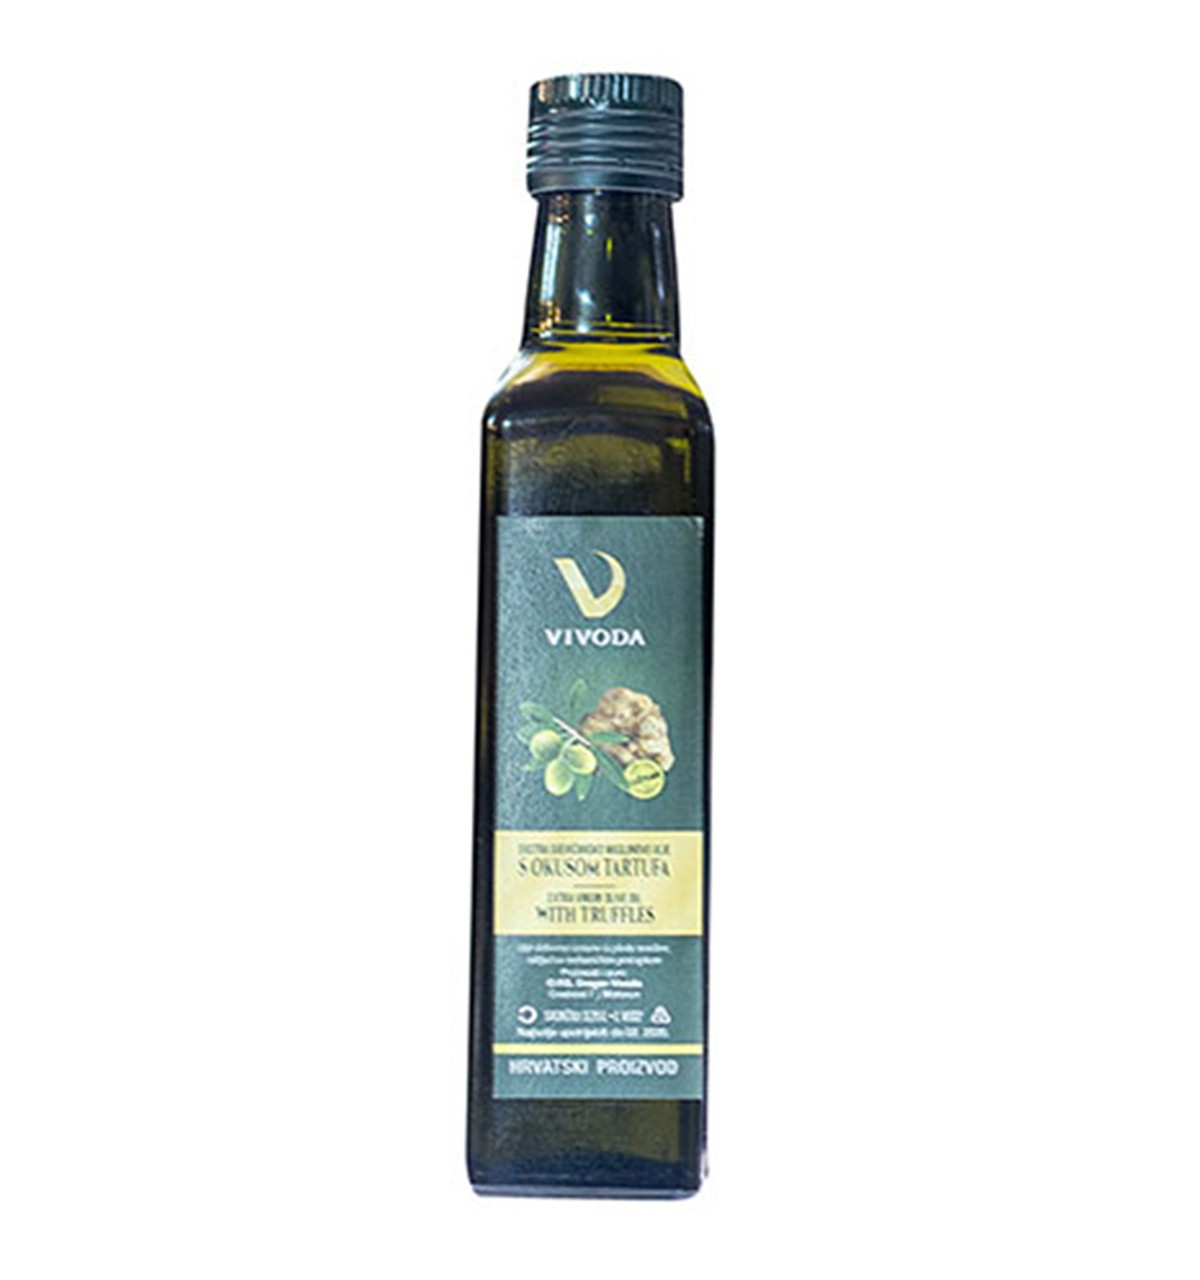 Olive oil with truffle flavor, Vivoda